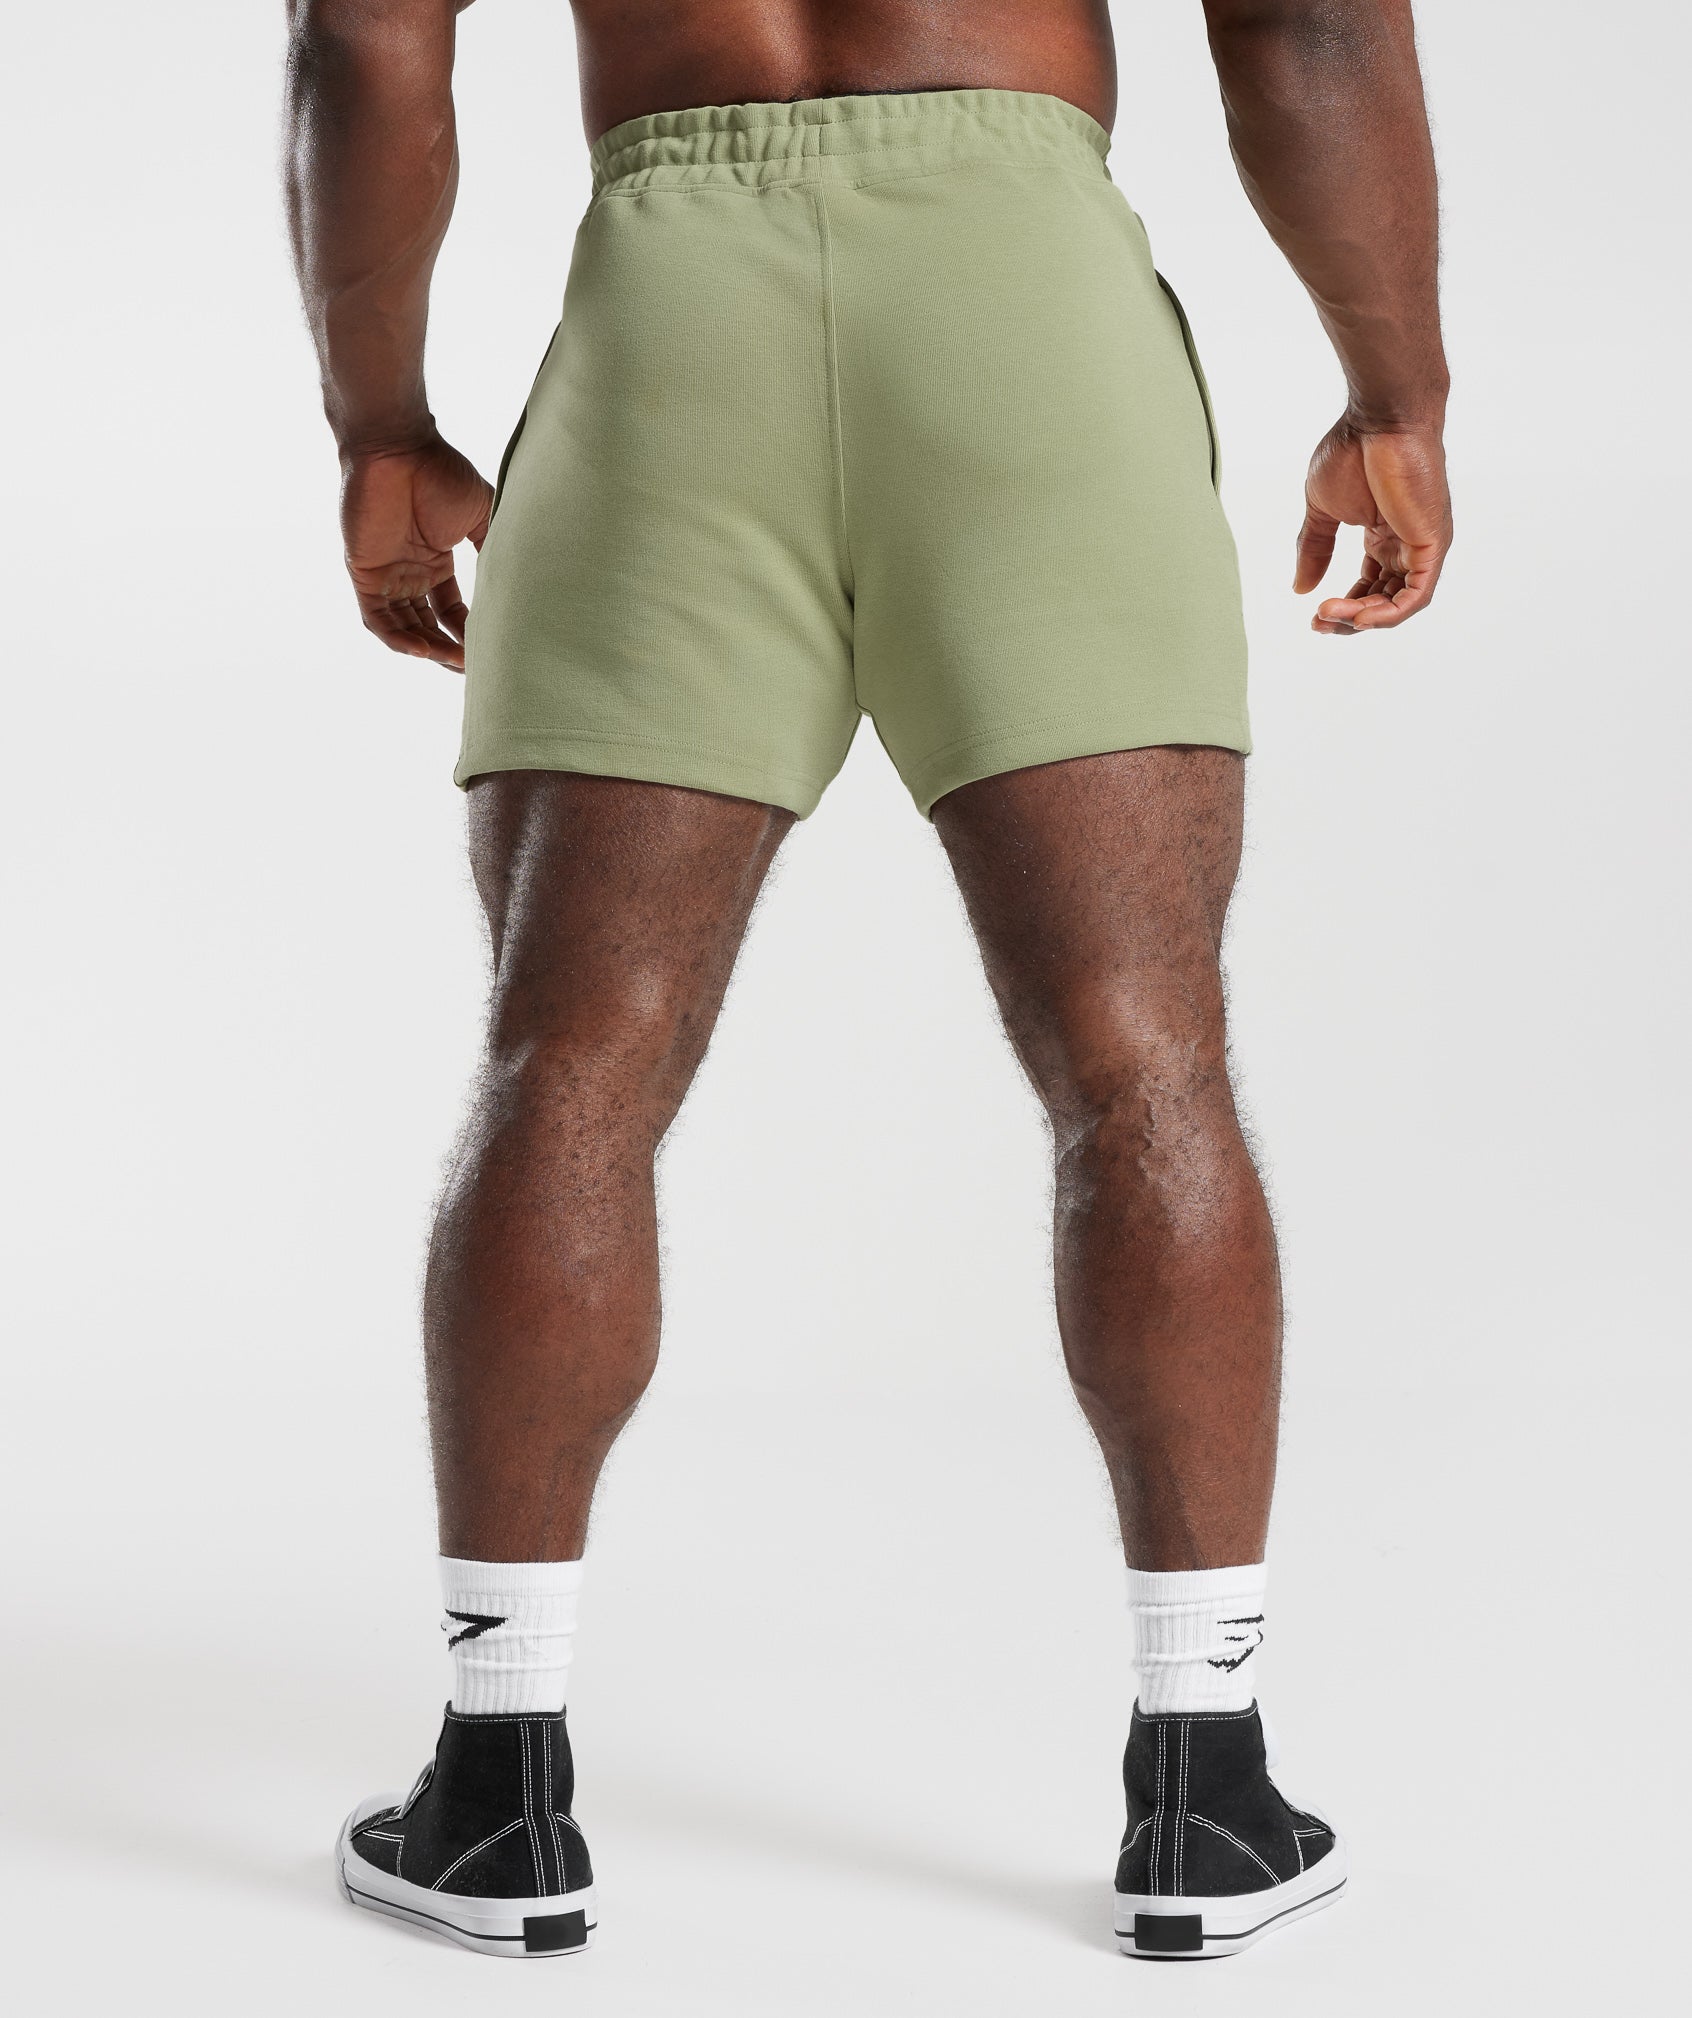 Gymshark React 5 Shorts - Dusk Green